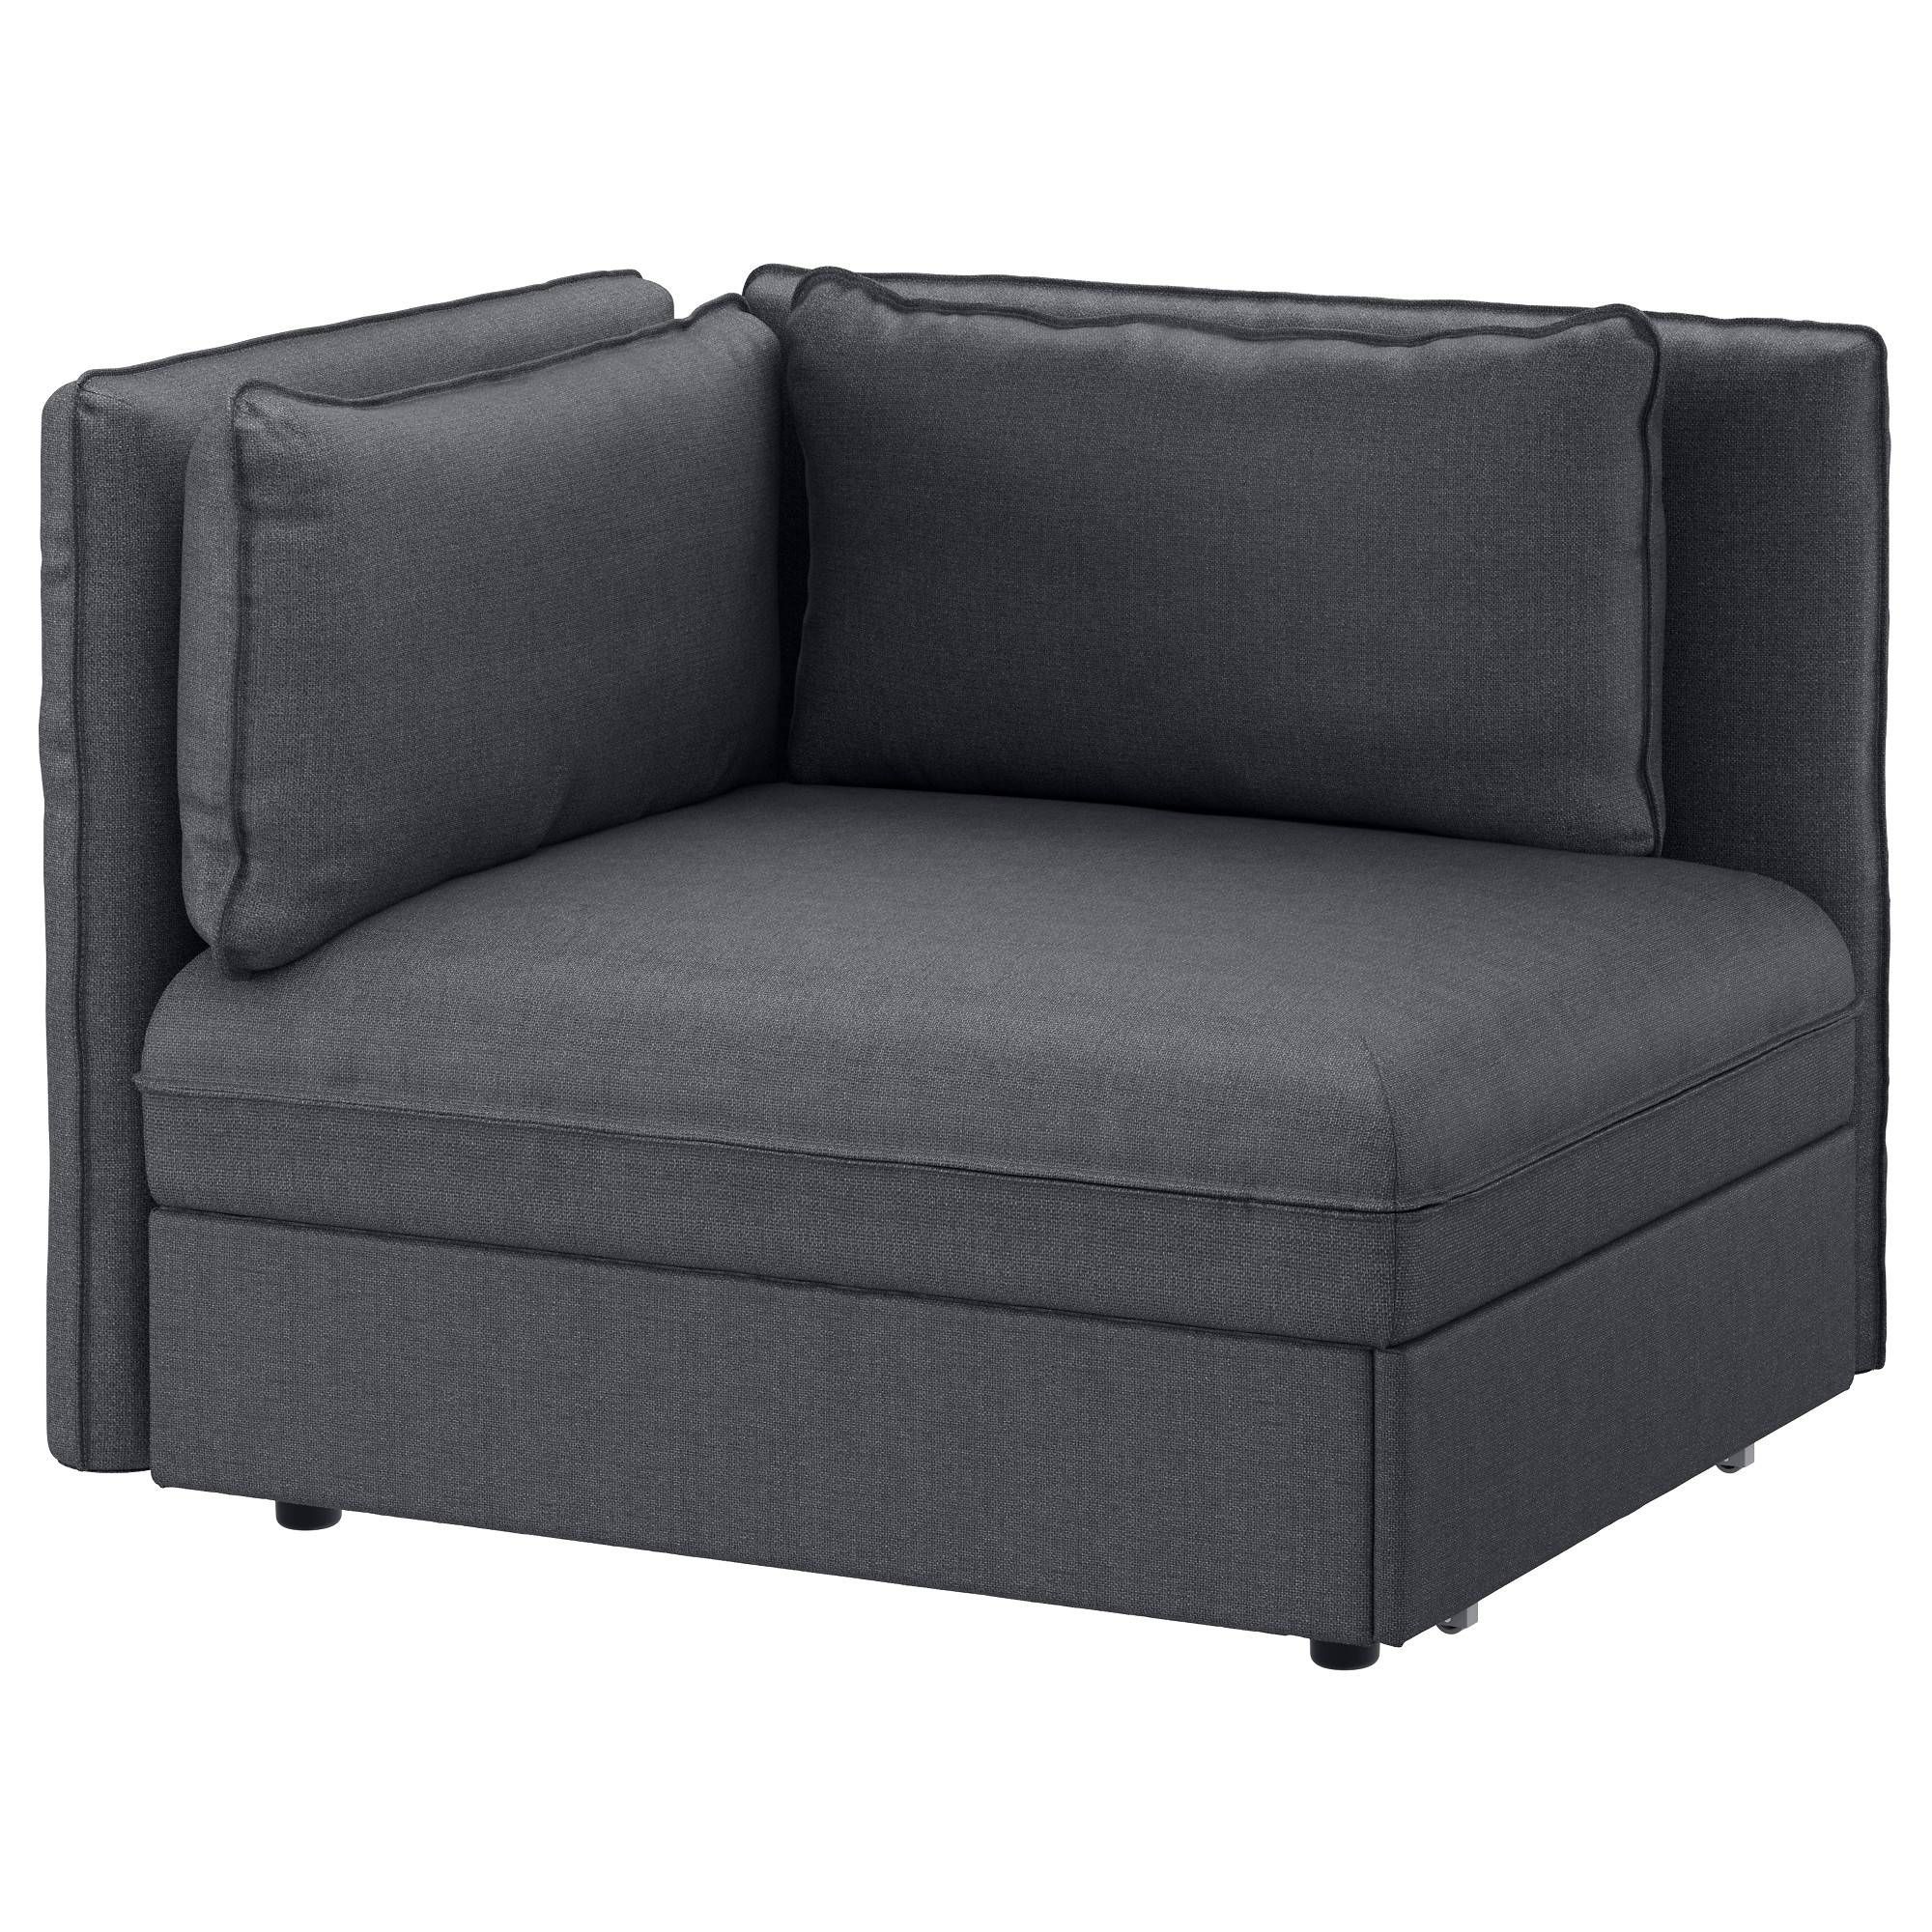 Sofa Beds & Futons – Ikea With Regard To Sleeper Sectional Sofa Ikea (View 18 of 25)